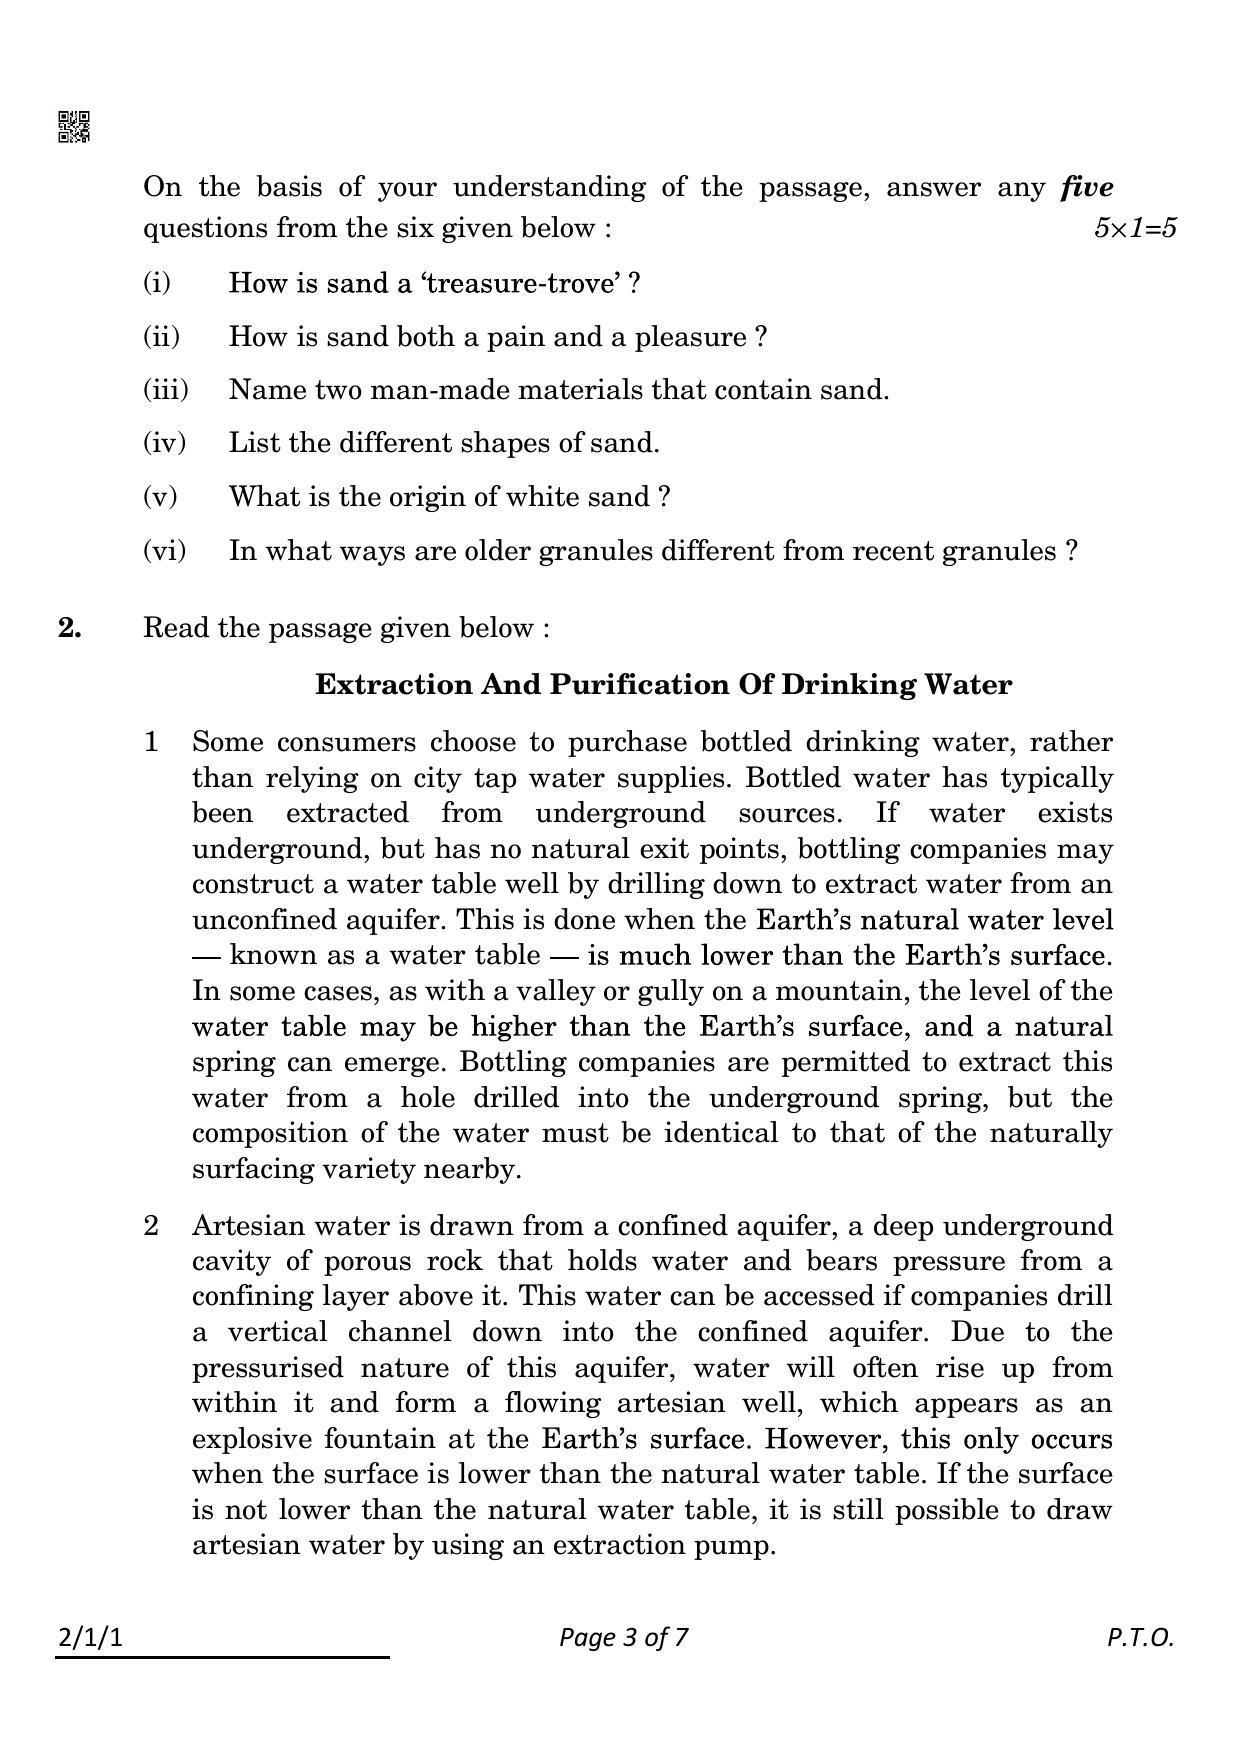 CBSE Class 10 2-1-1 English L & L 2022 Question Paper - Page 3